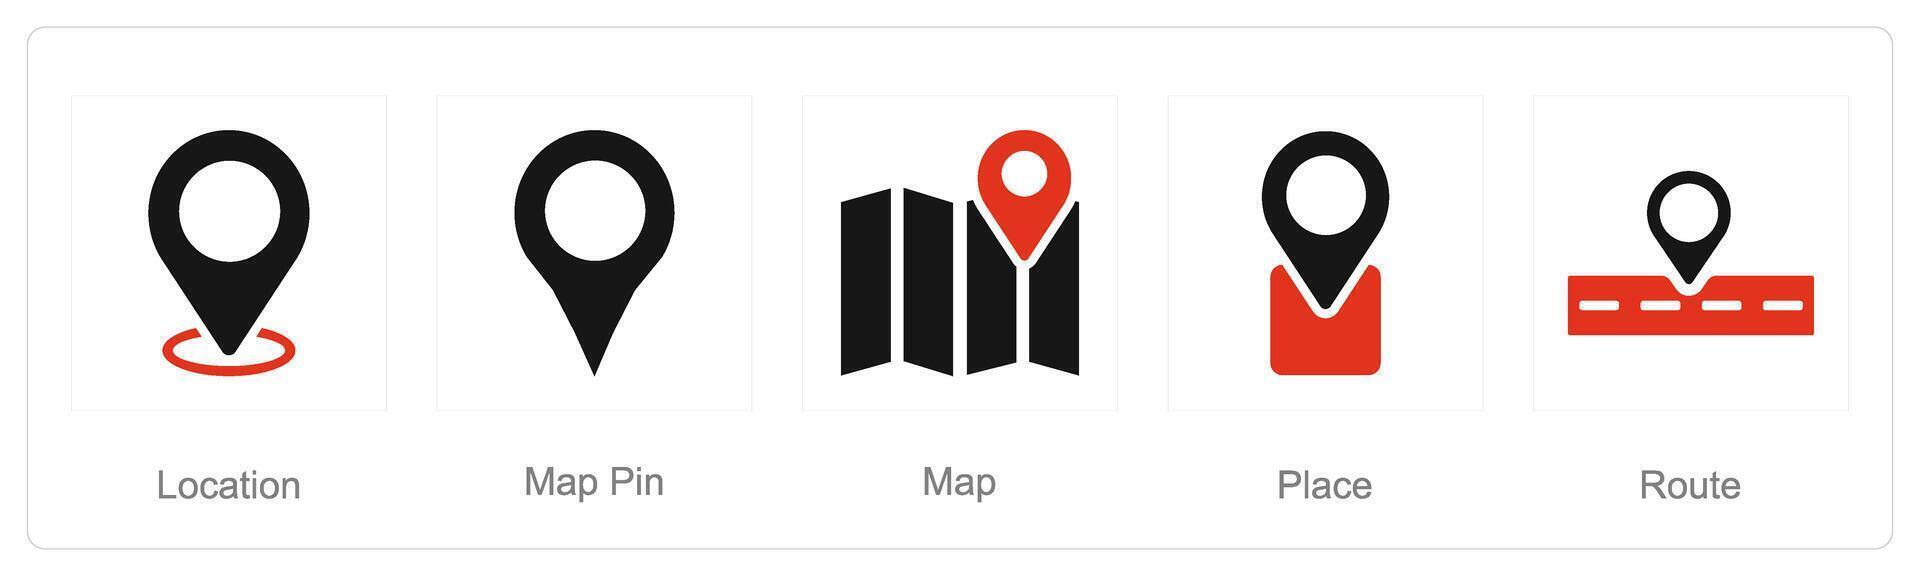 un conjunto de 5 5 ubicación íconos como ubicación, mapa alfiler, mapa vector